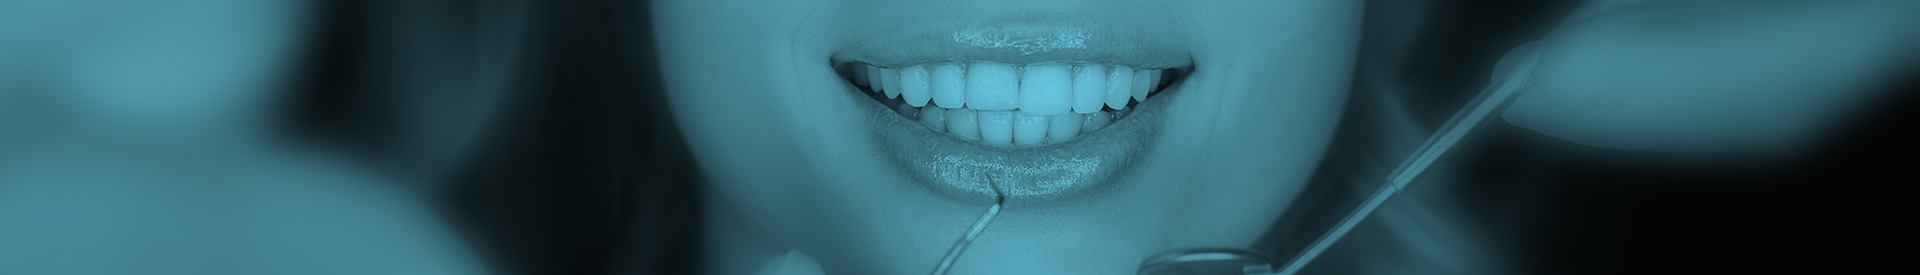 pain-free-dentistry